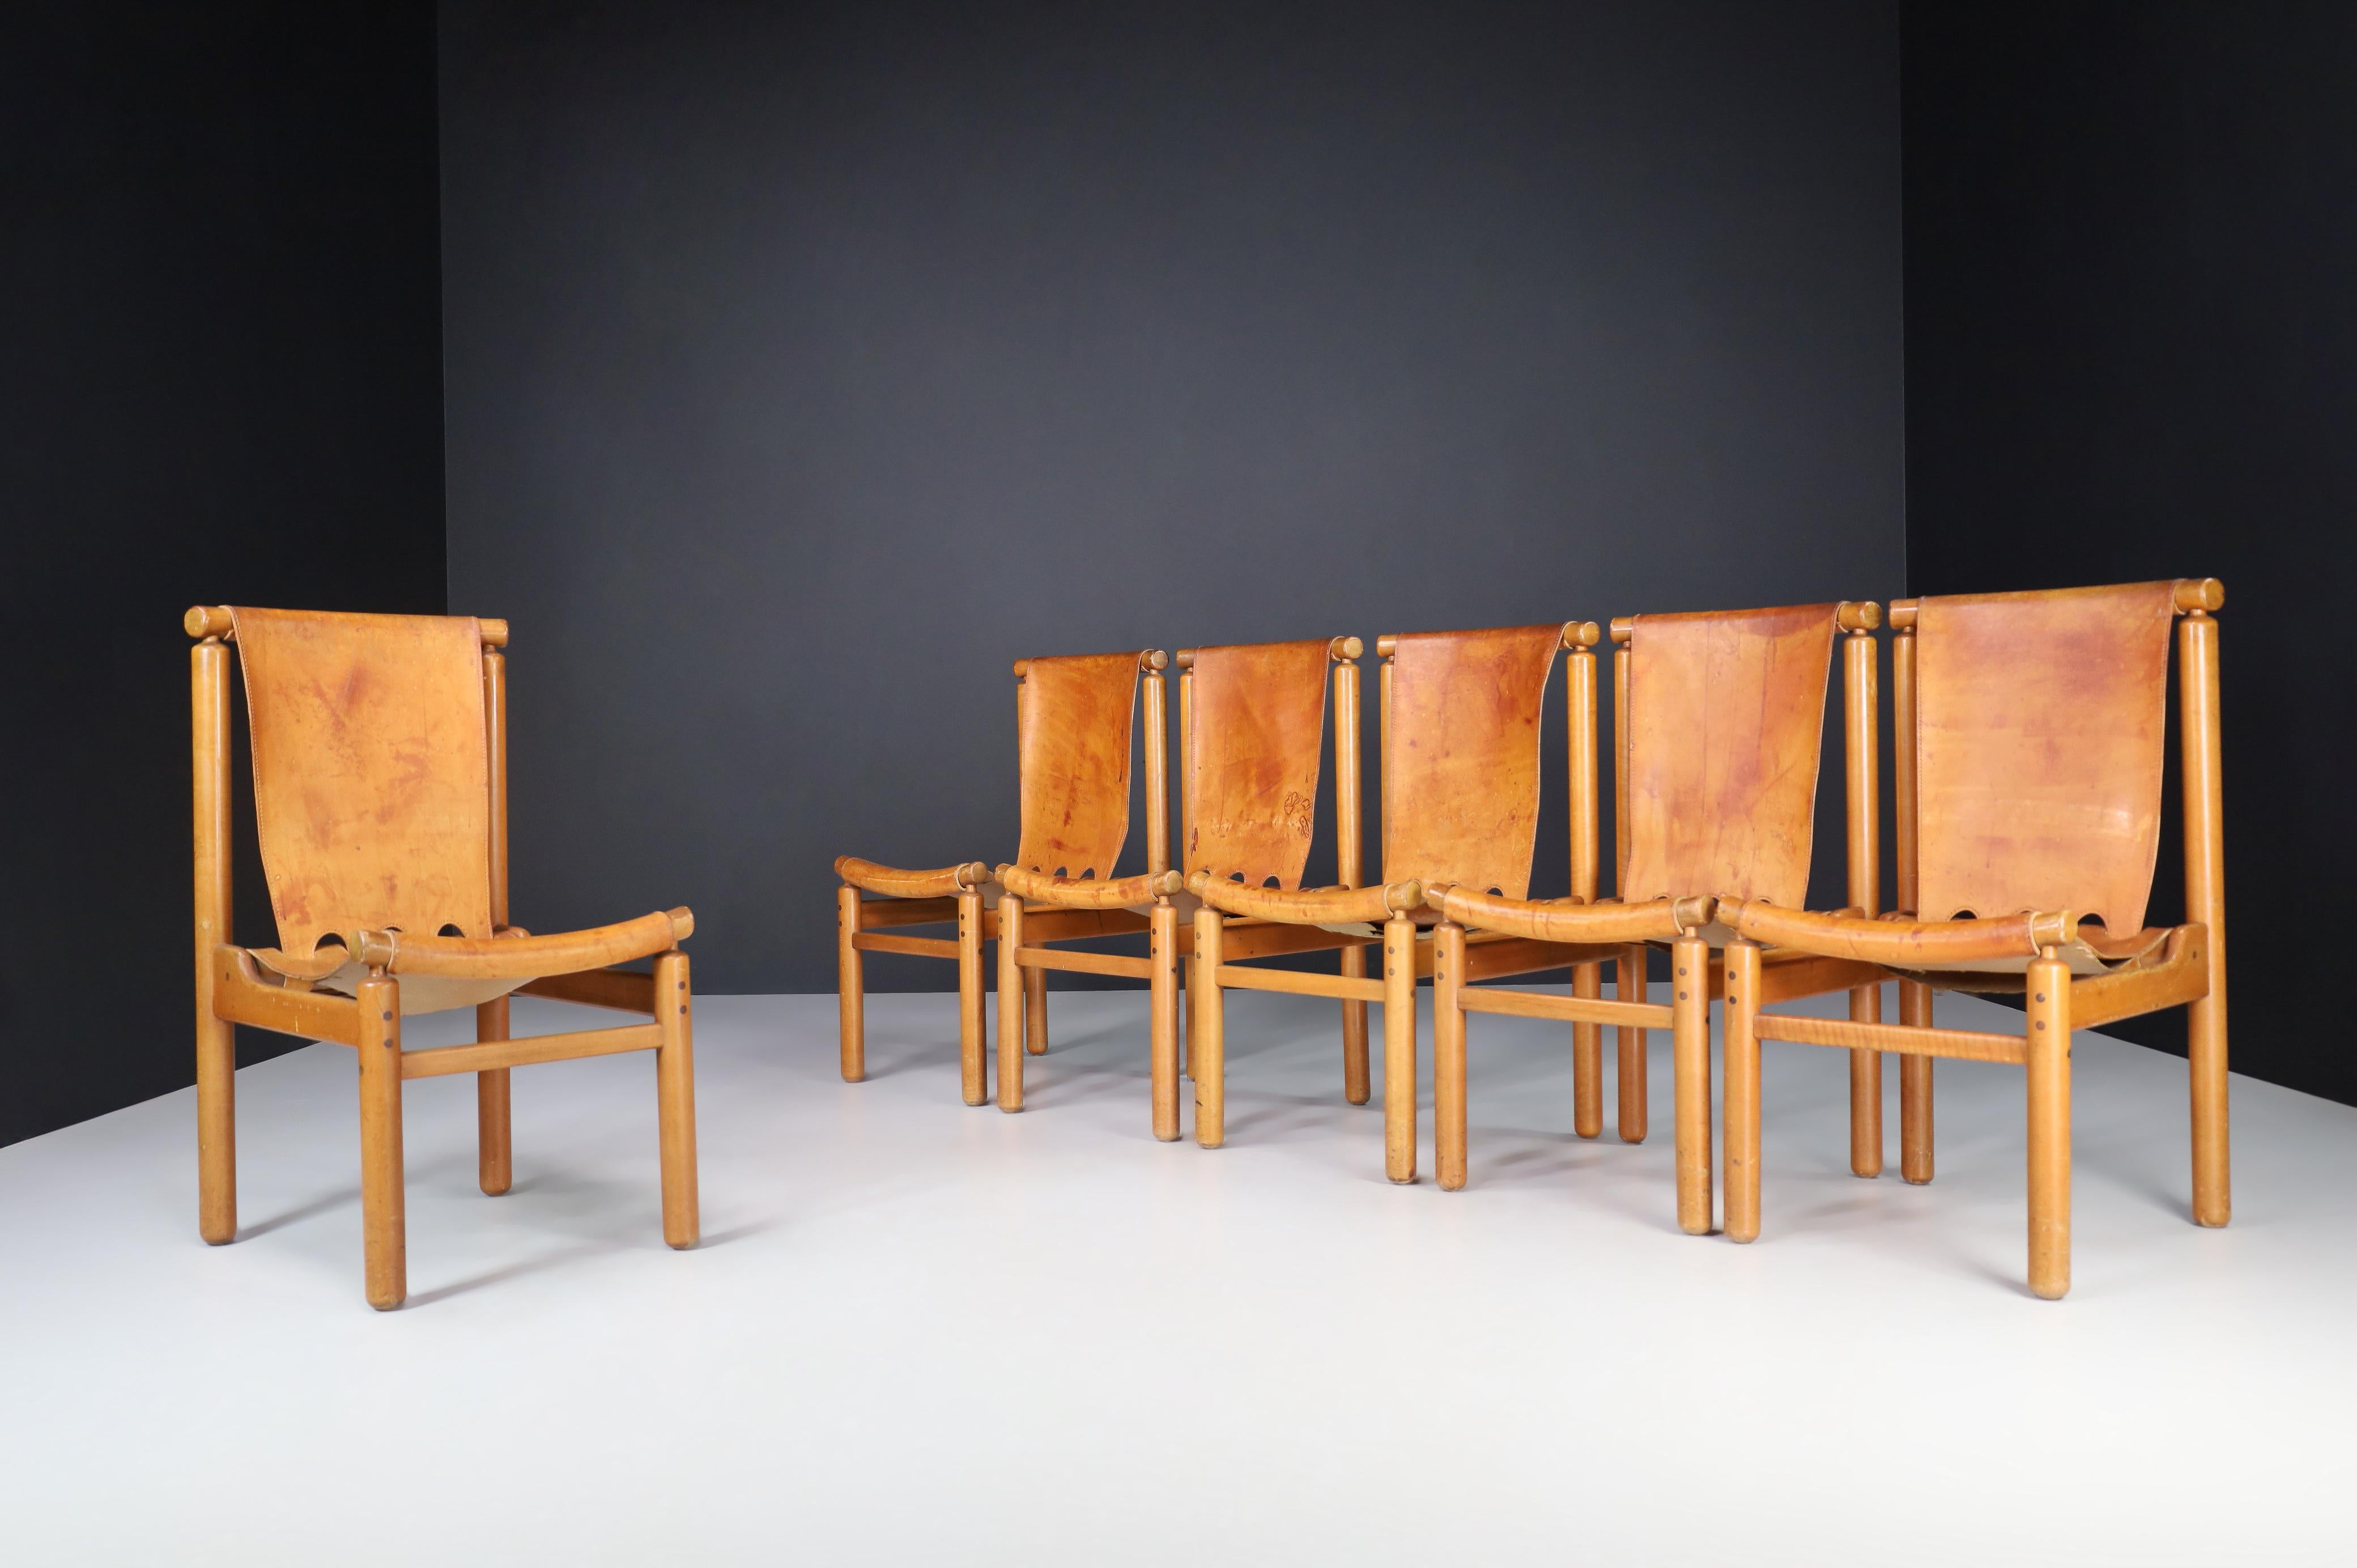 Scandinavian Modern Ilmari Tapiovaara Dining Chairs, Finland, the 1960s For Sale